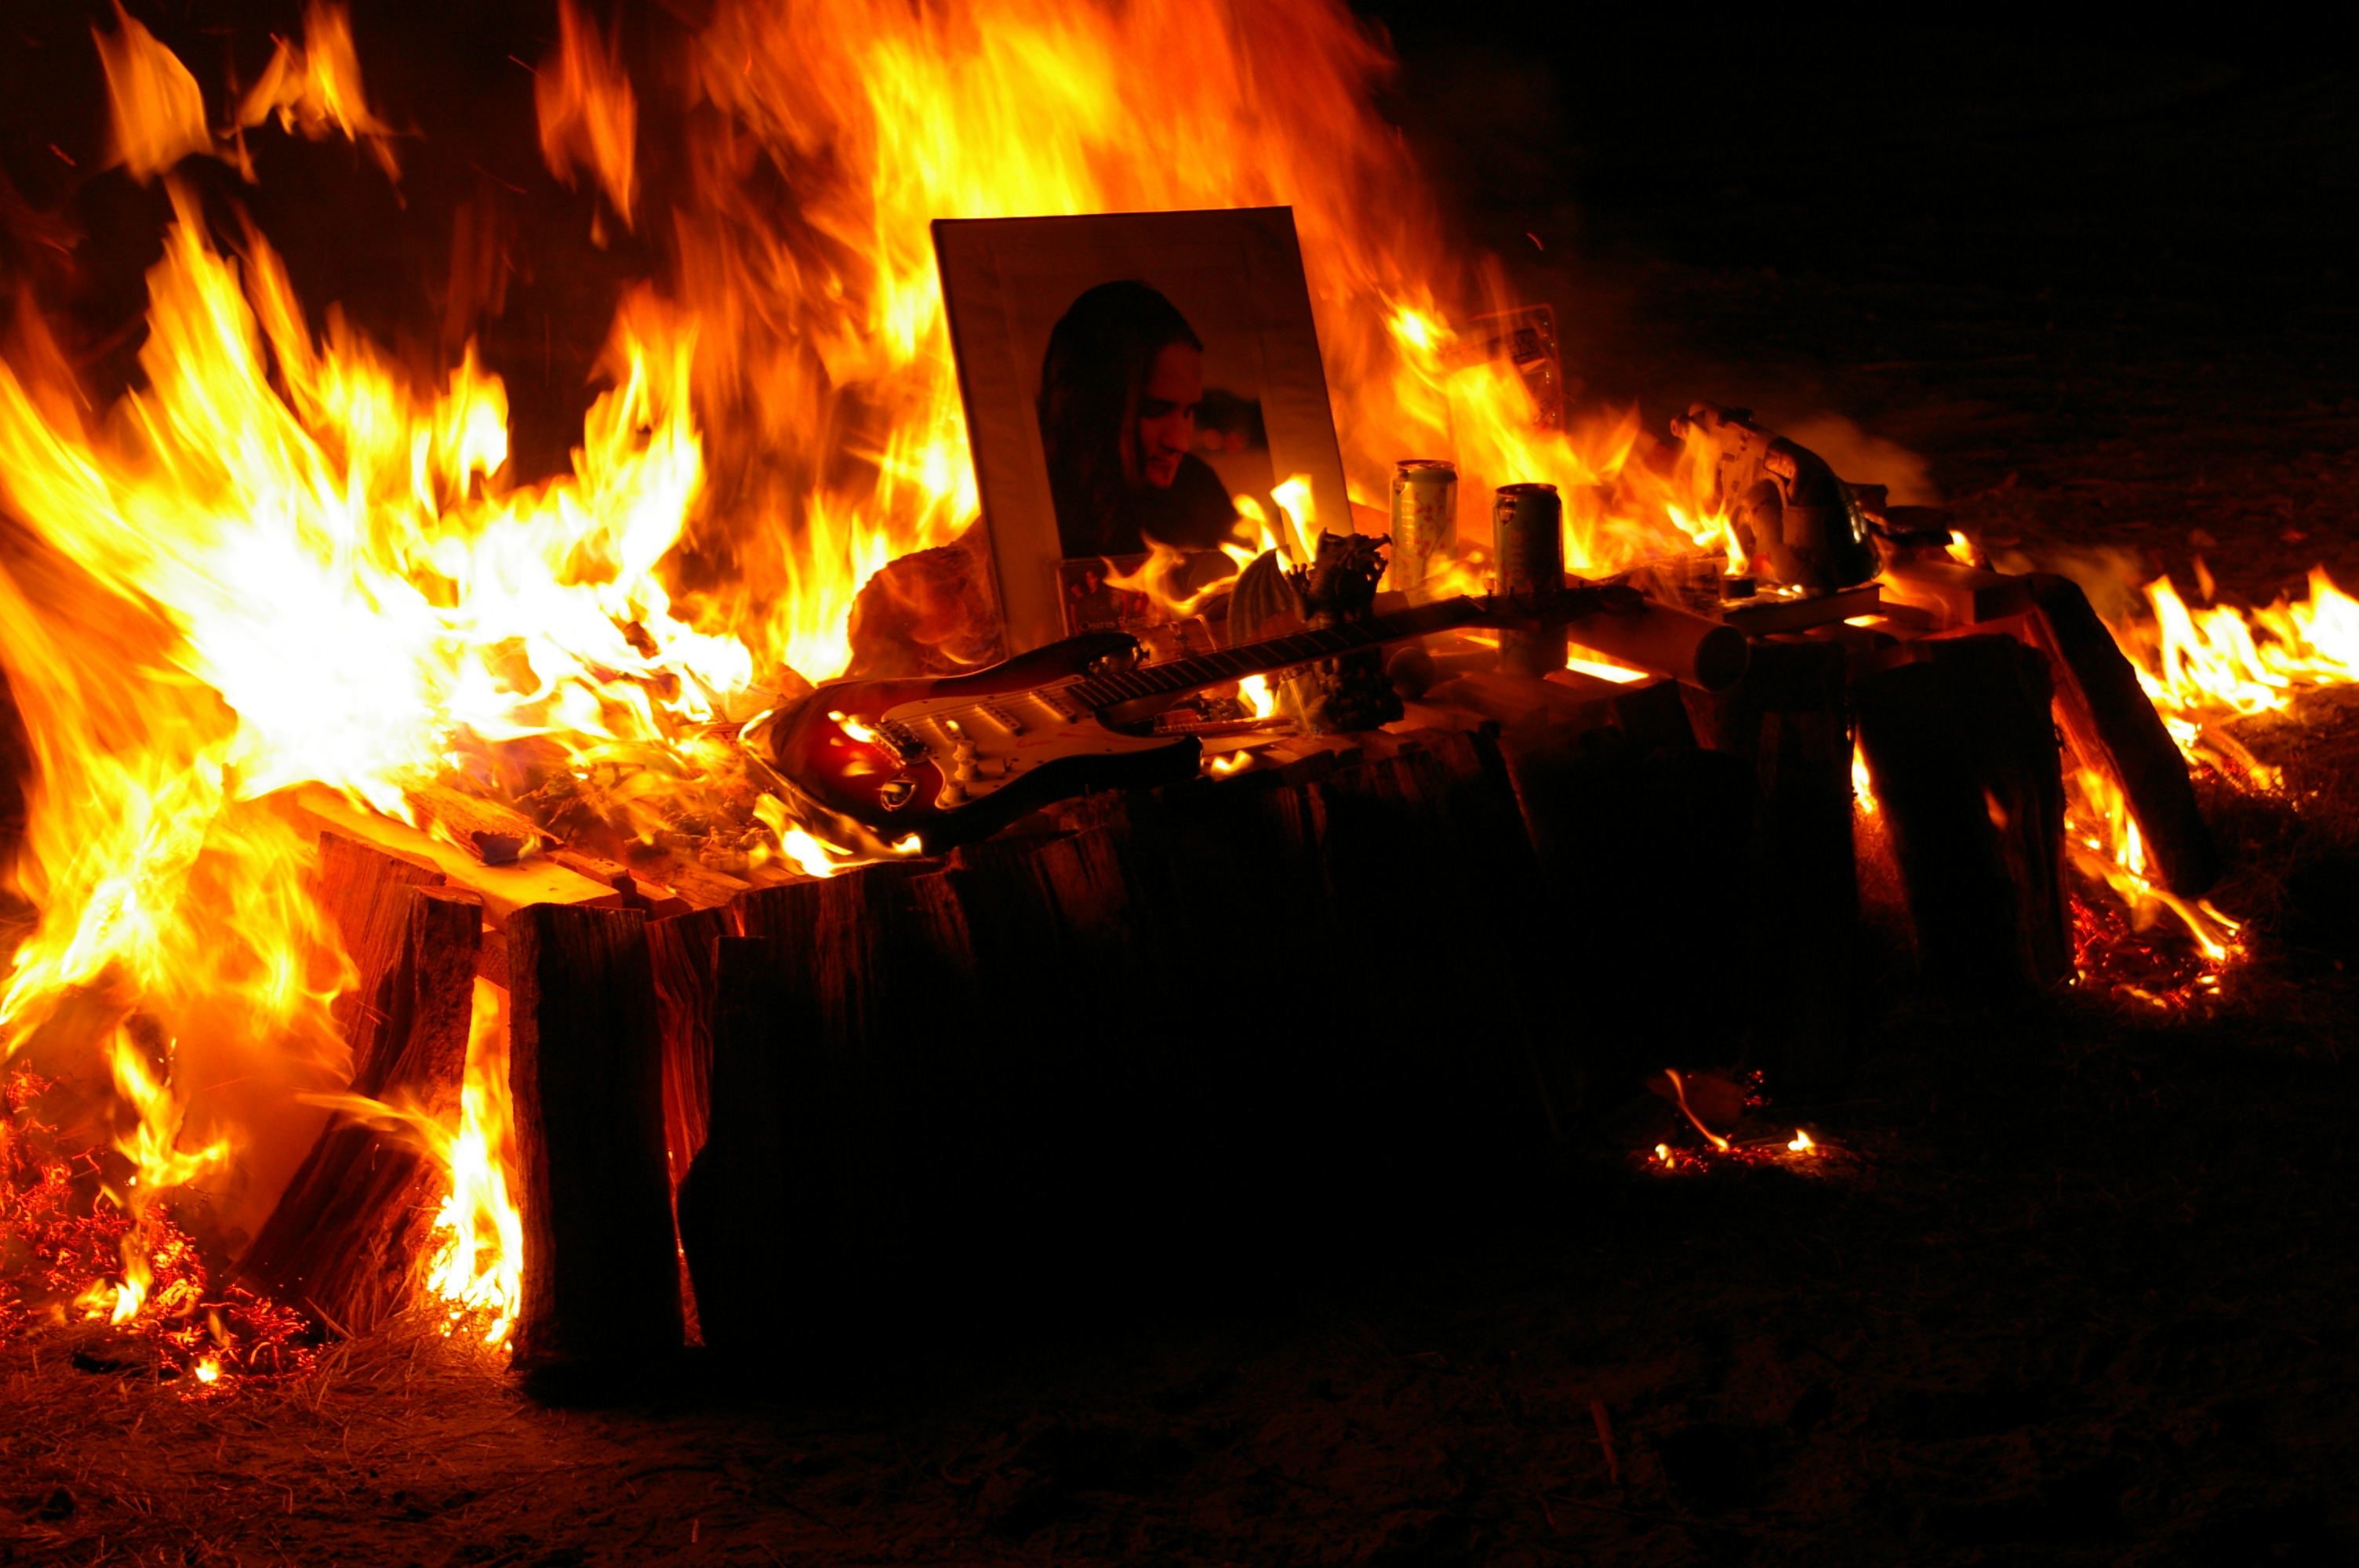 Flaming pyre and Joe's memorial photo